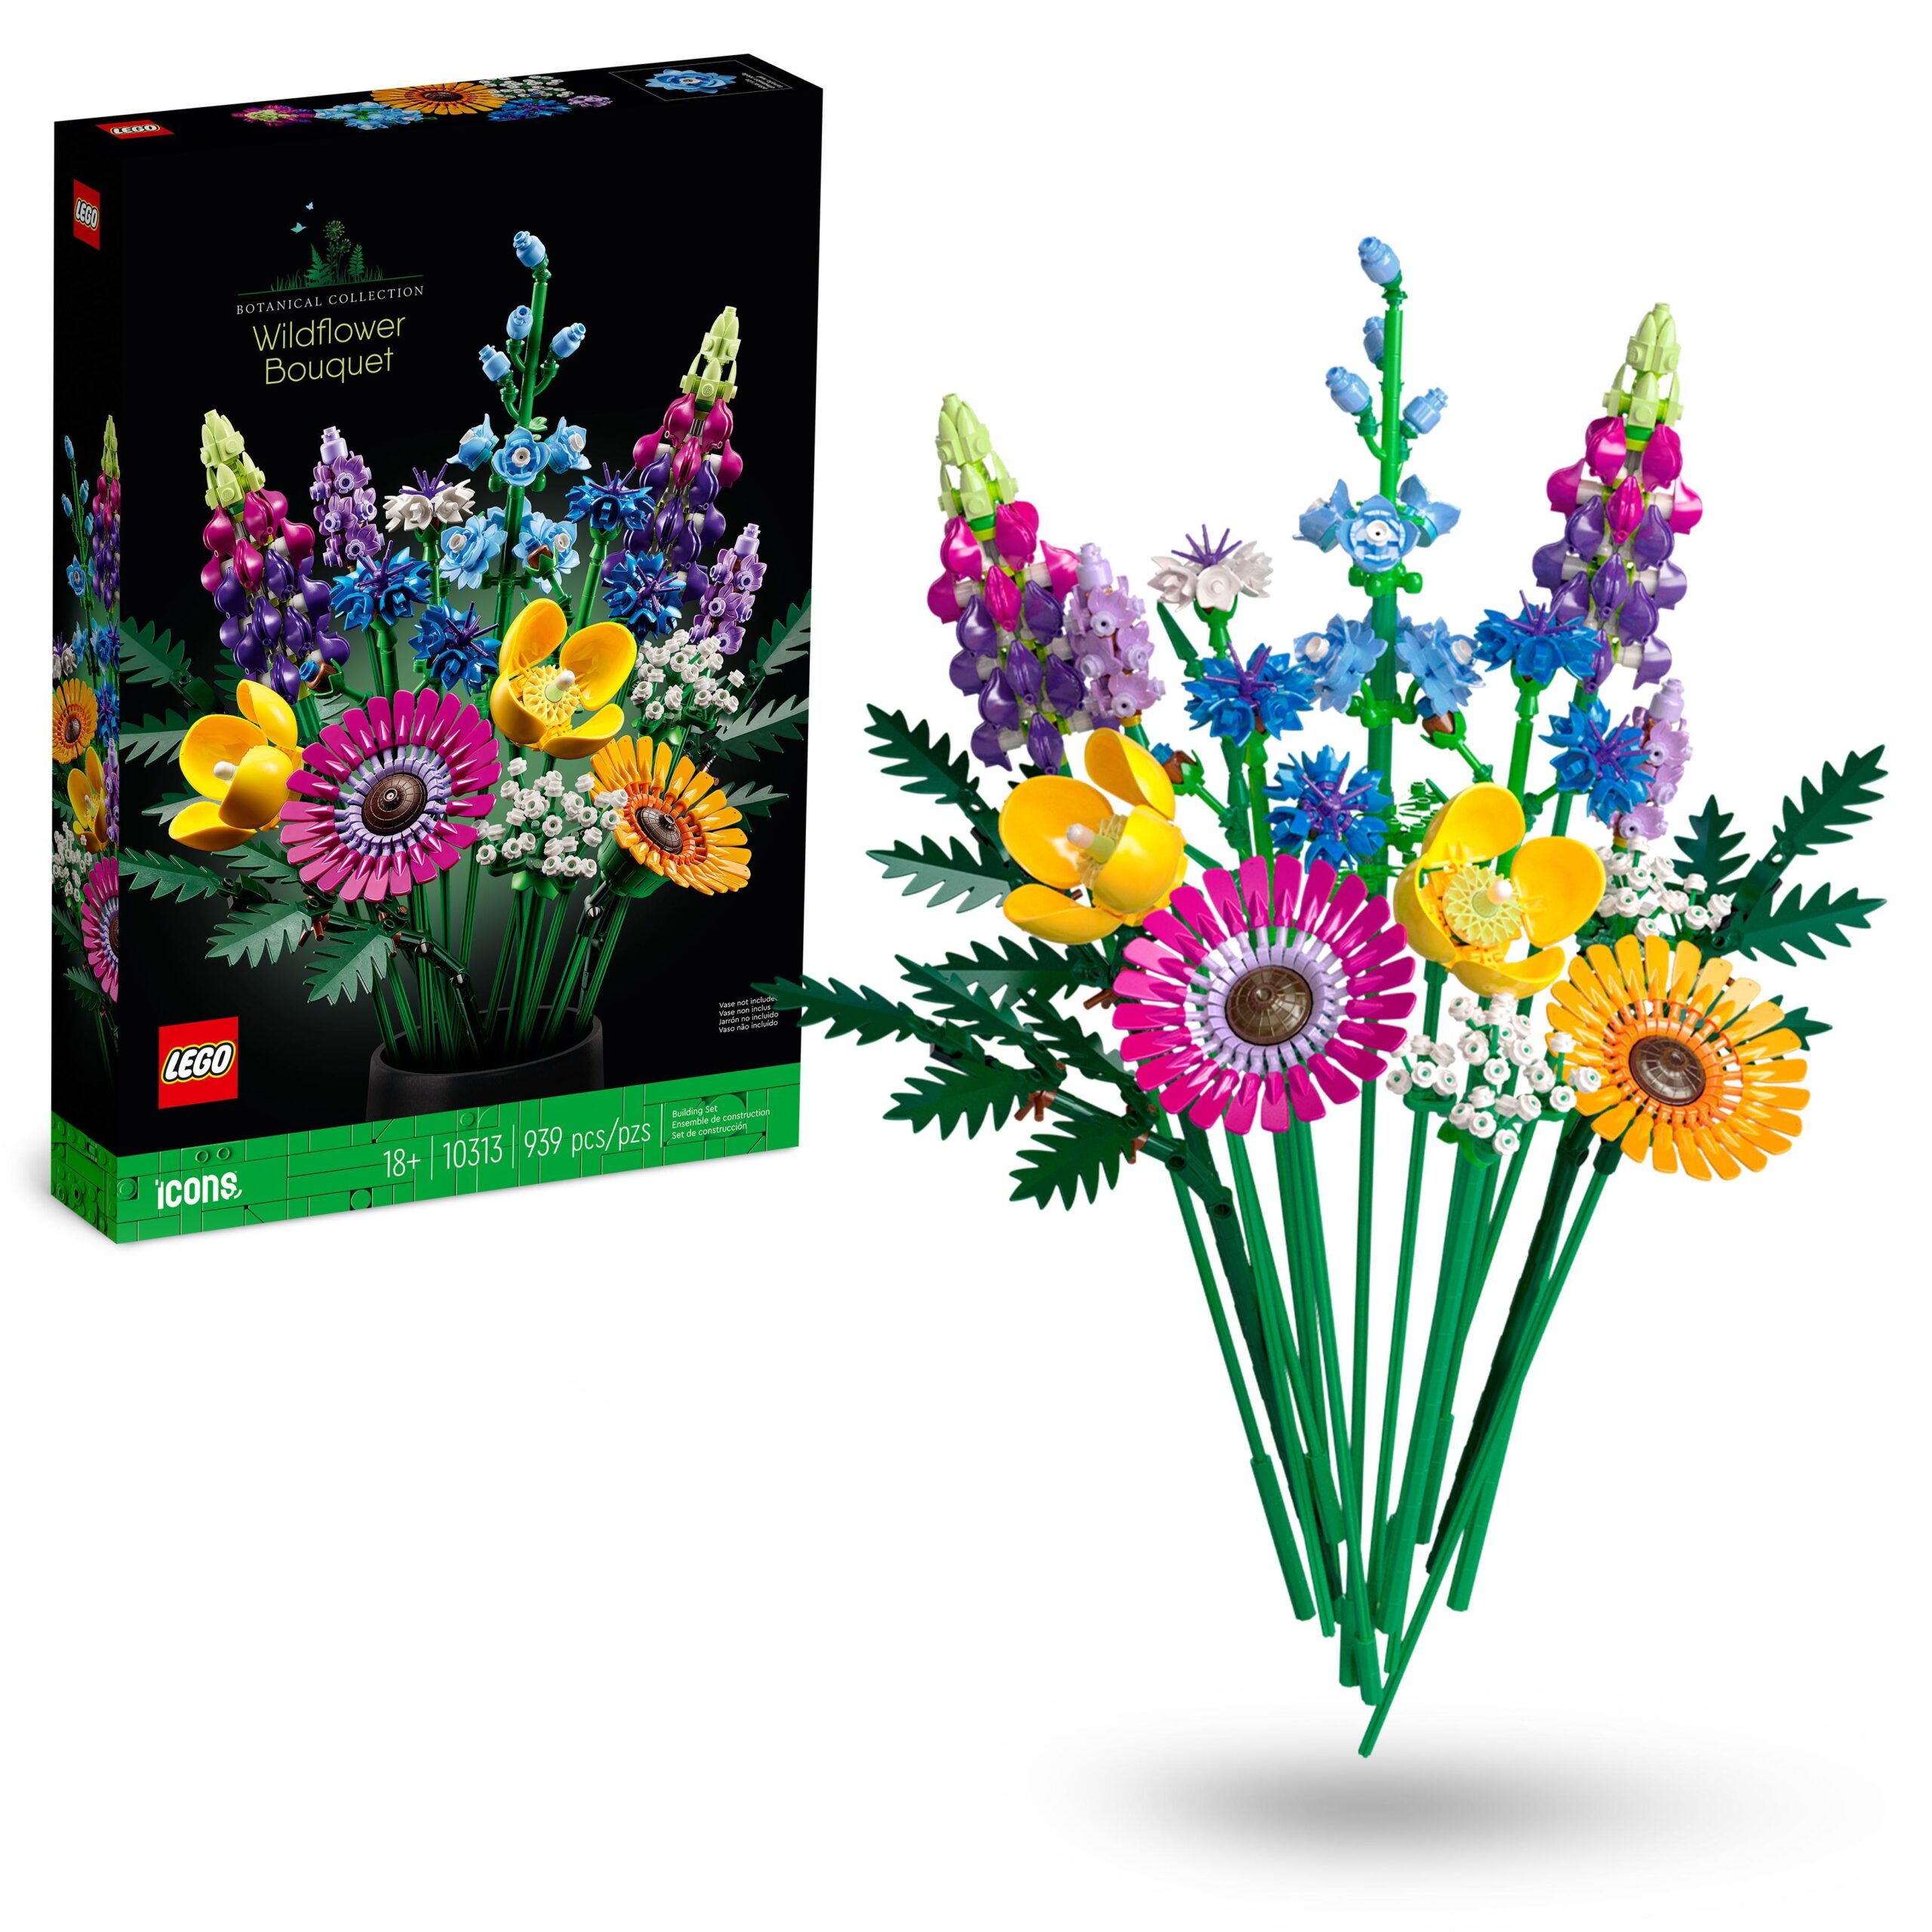 Lego icons 10313 bouquet fiori selvatici finti con papaveri e lavanda artificiali, idea regalo adulti, botanical collection - Lego, LEGO ICONS